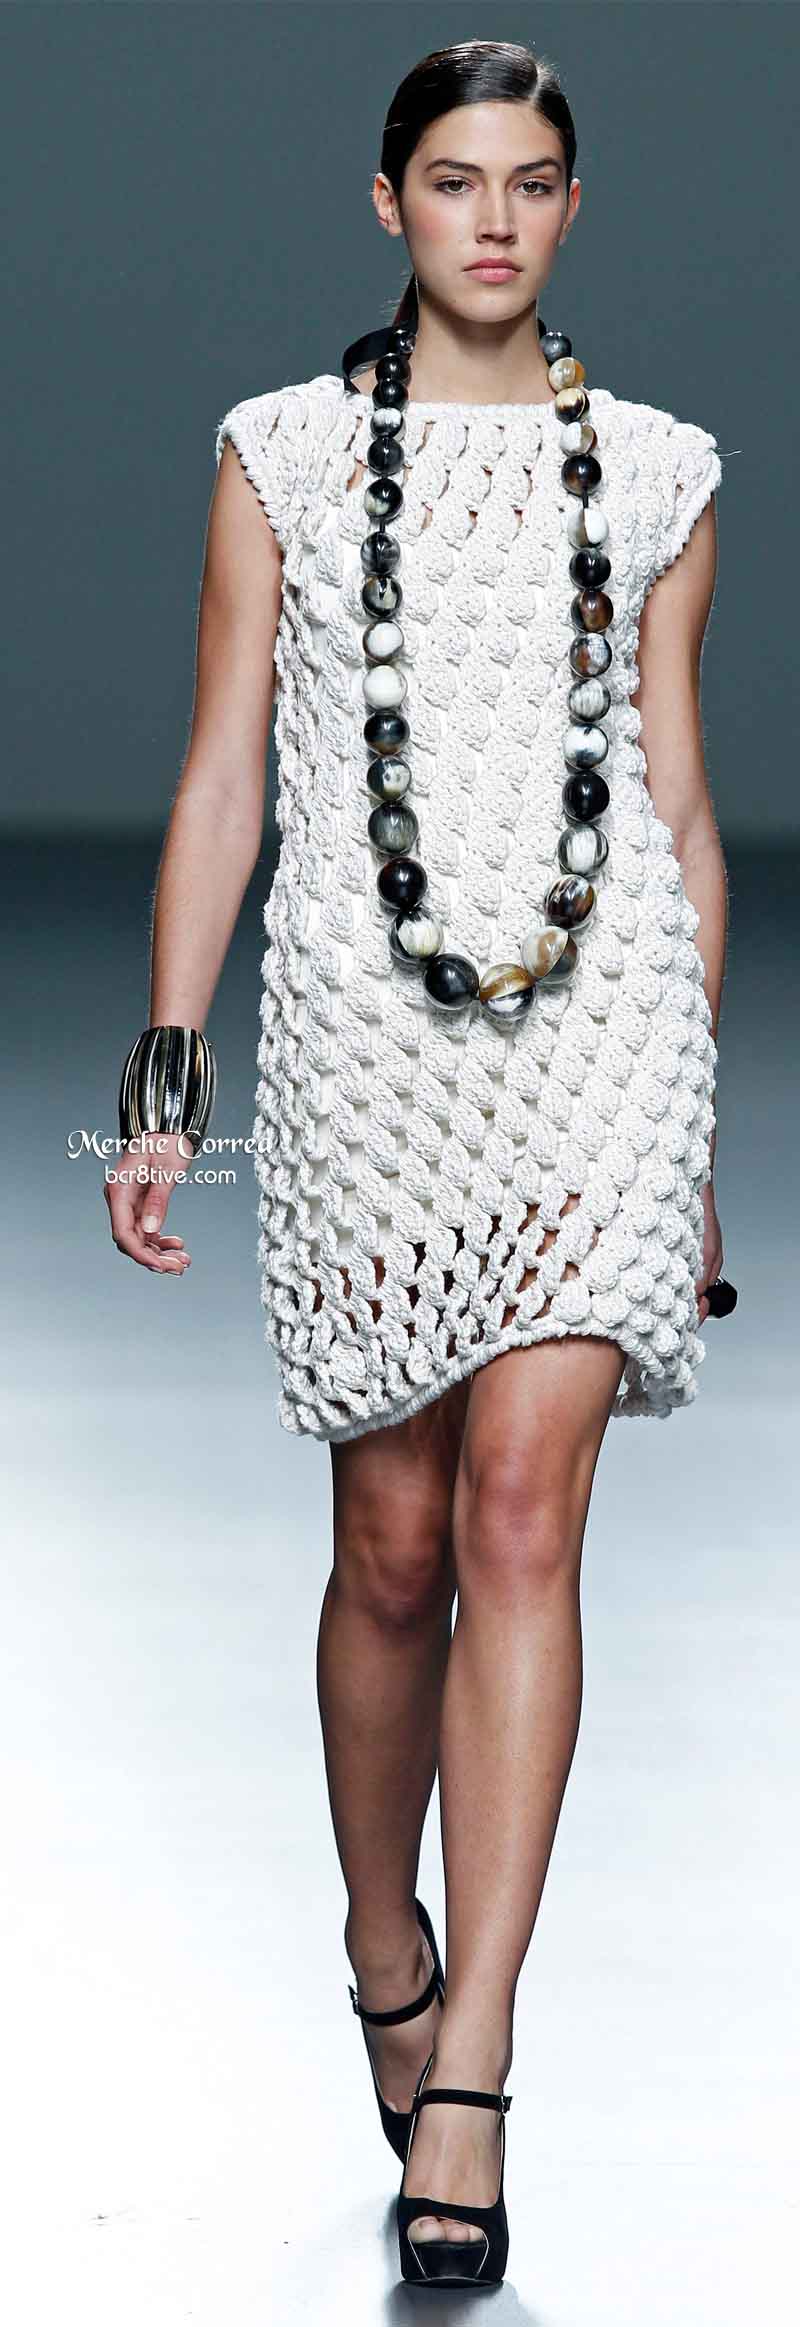 Merche Correa Spring 2014 - Crocheted Dress